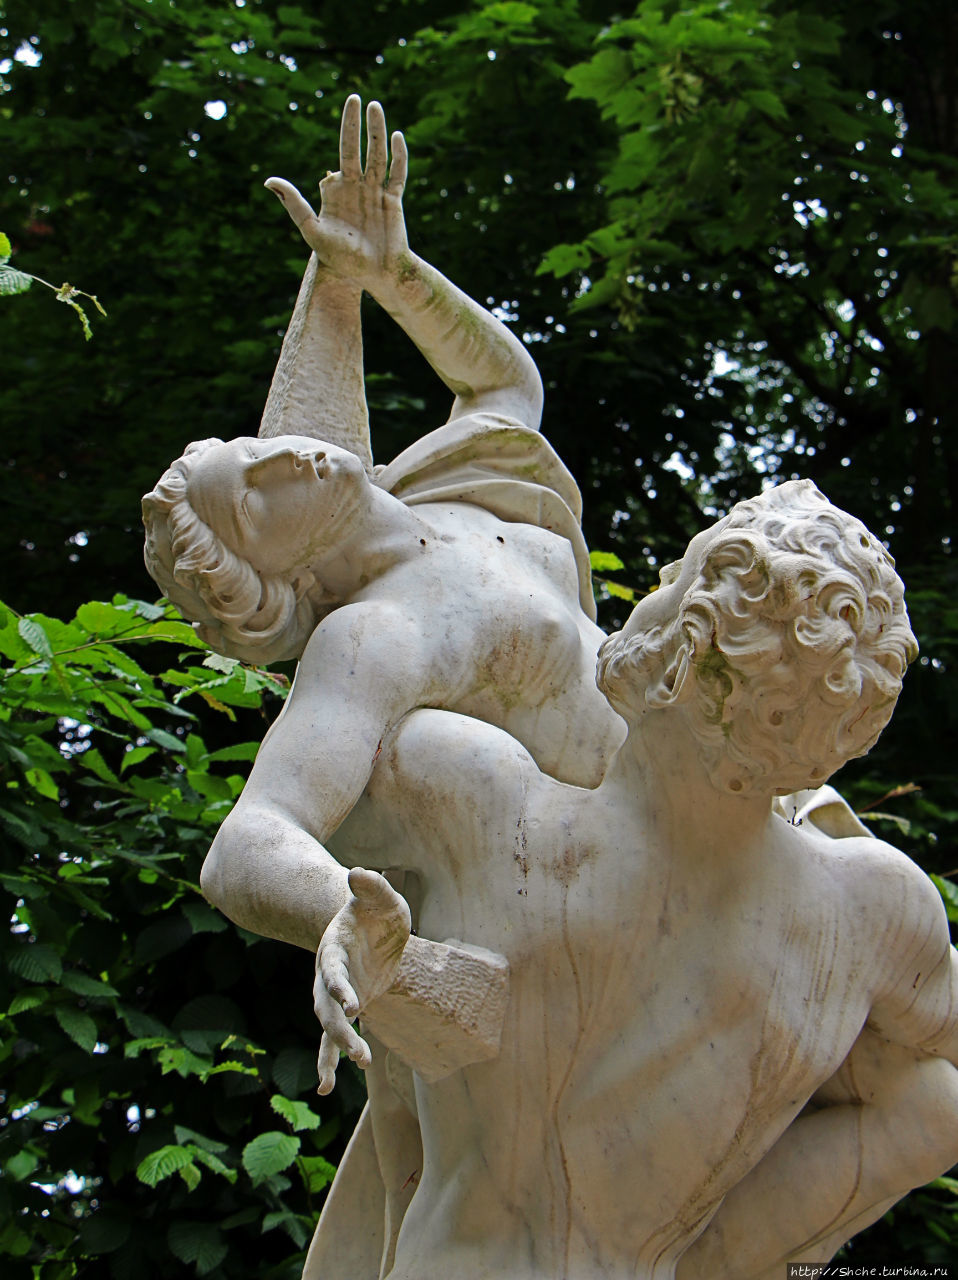 Мраморные скульптуры дворцово-паркового комплекса Потсдама